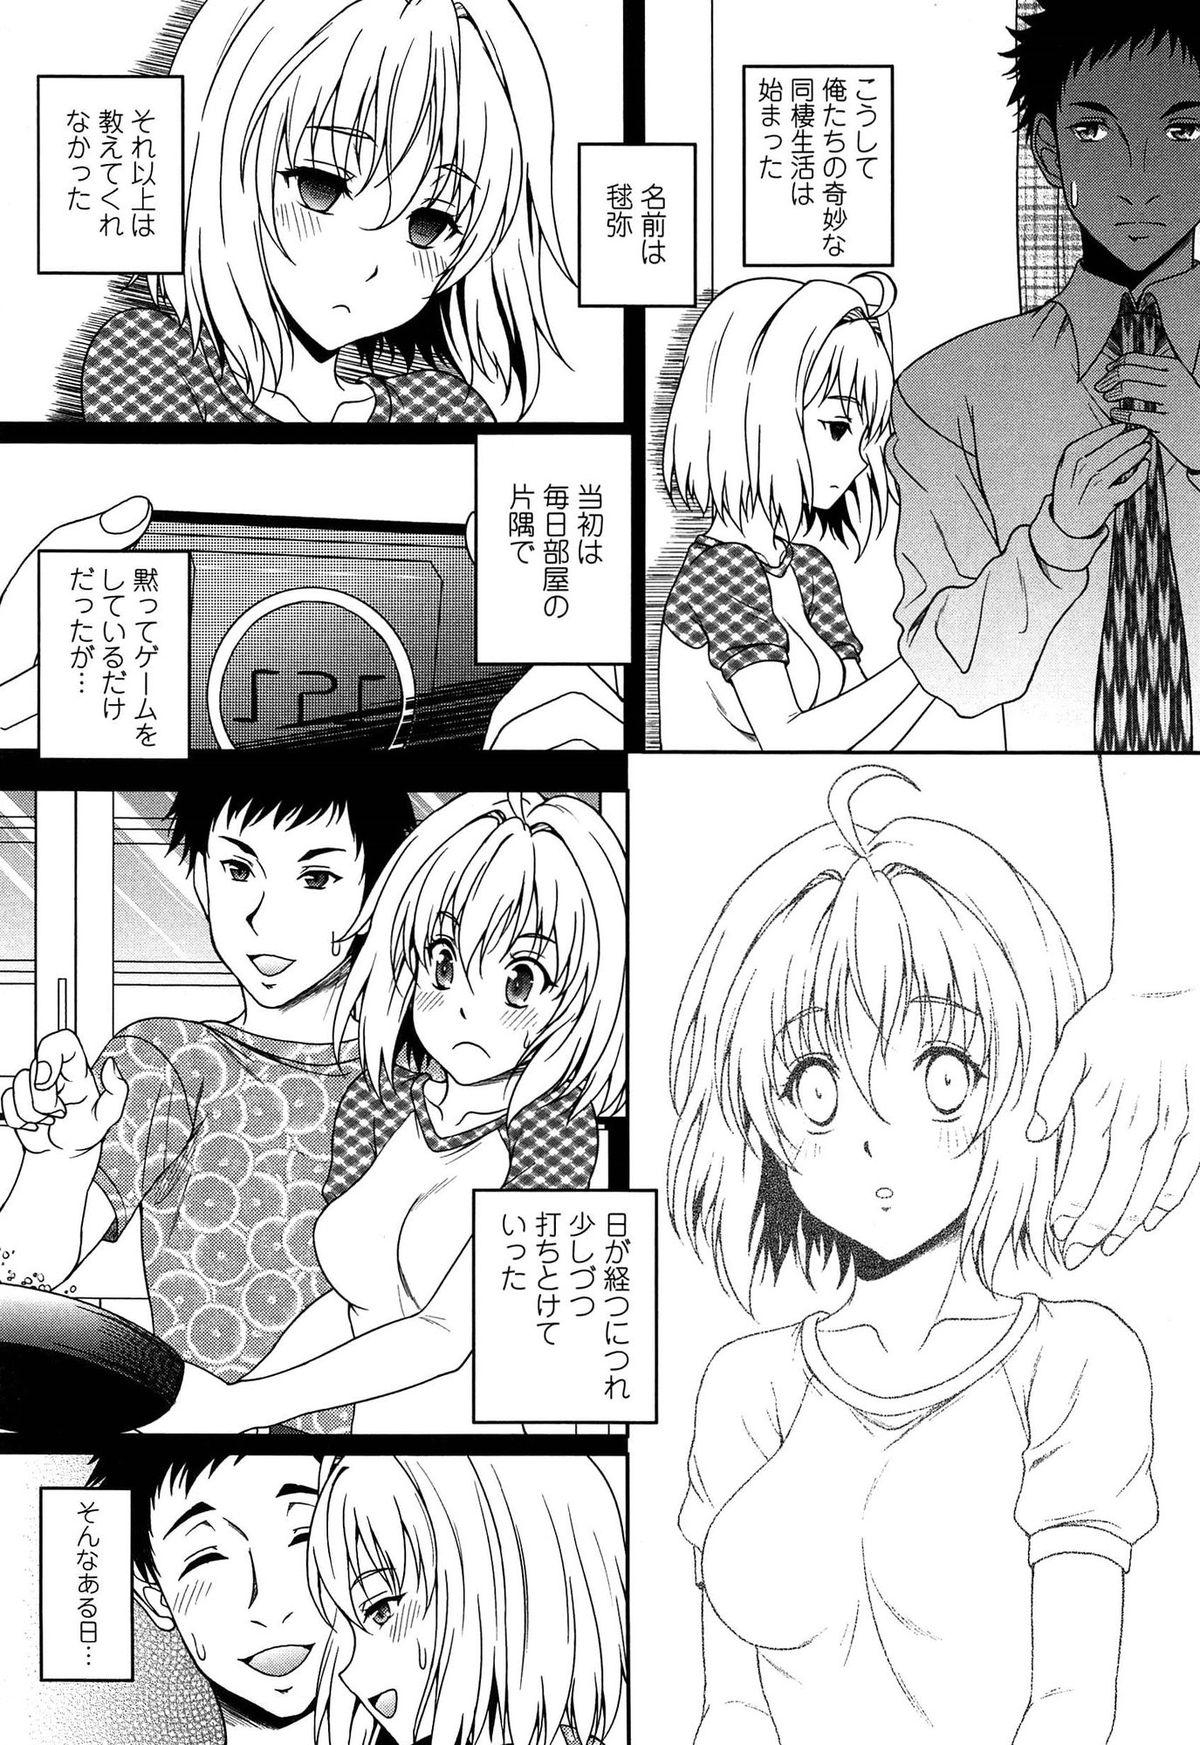 Hajimete nan dakara - First sexual experience 188